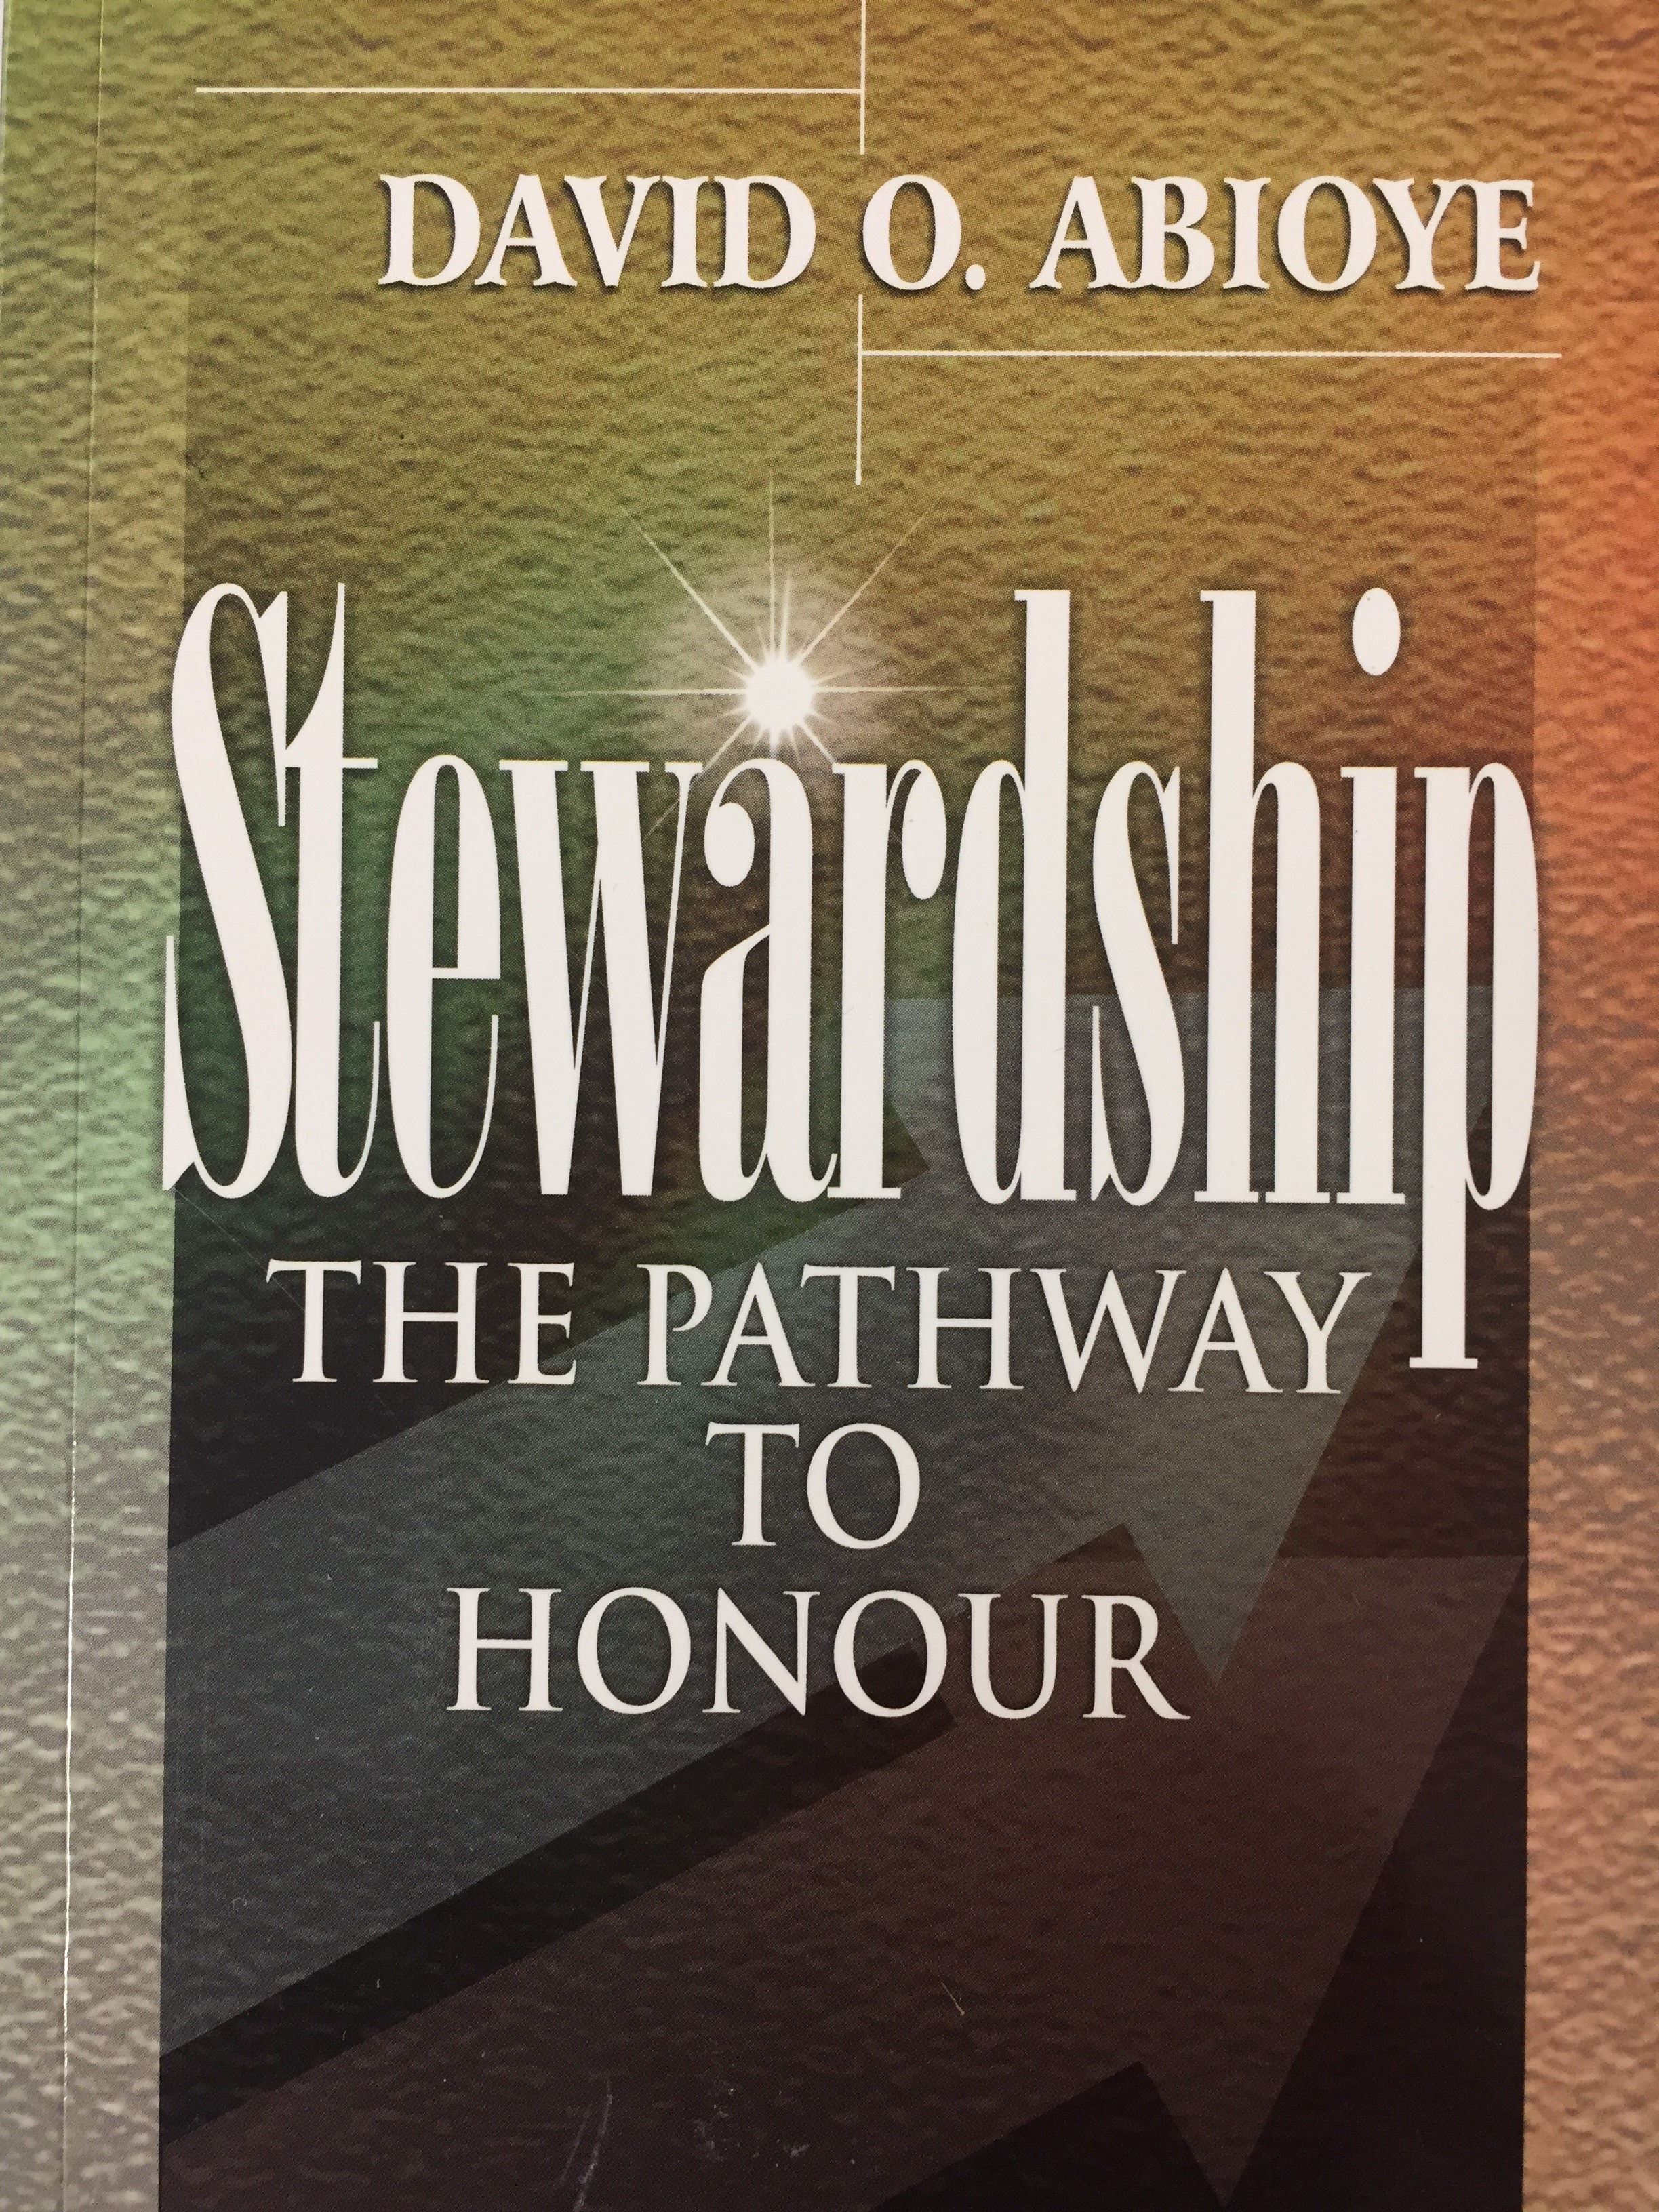 Stewardship: The Pathway To Honour PB - David O Abioye